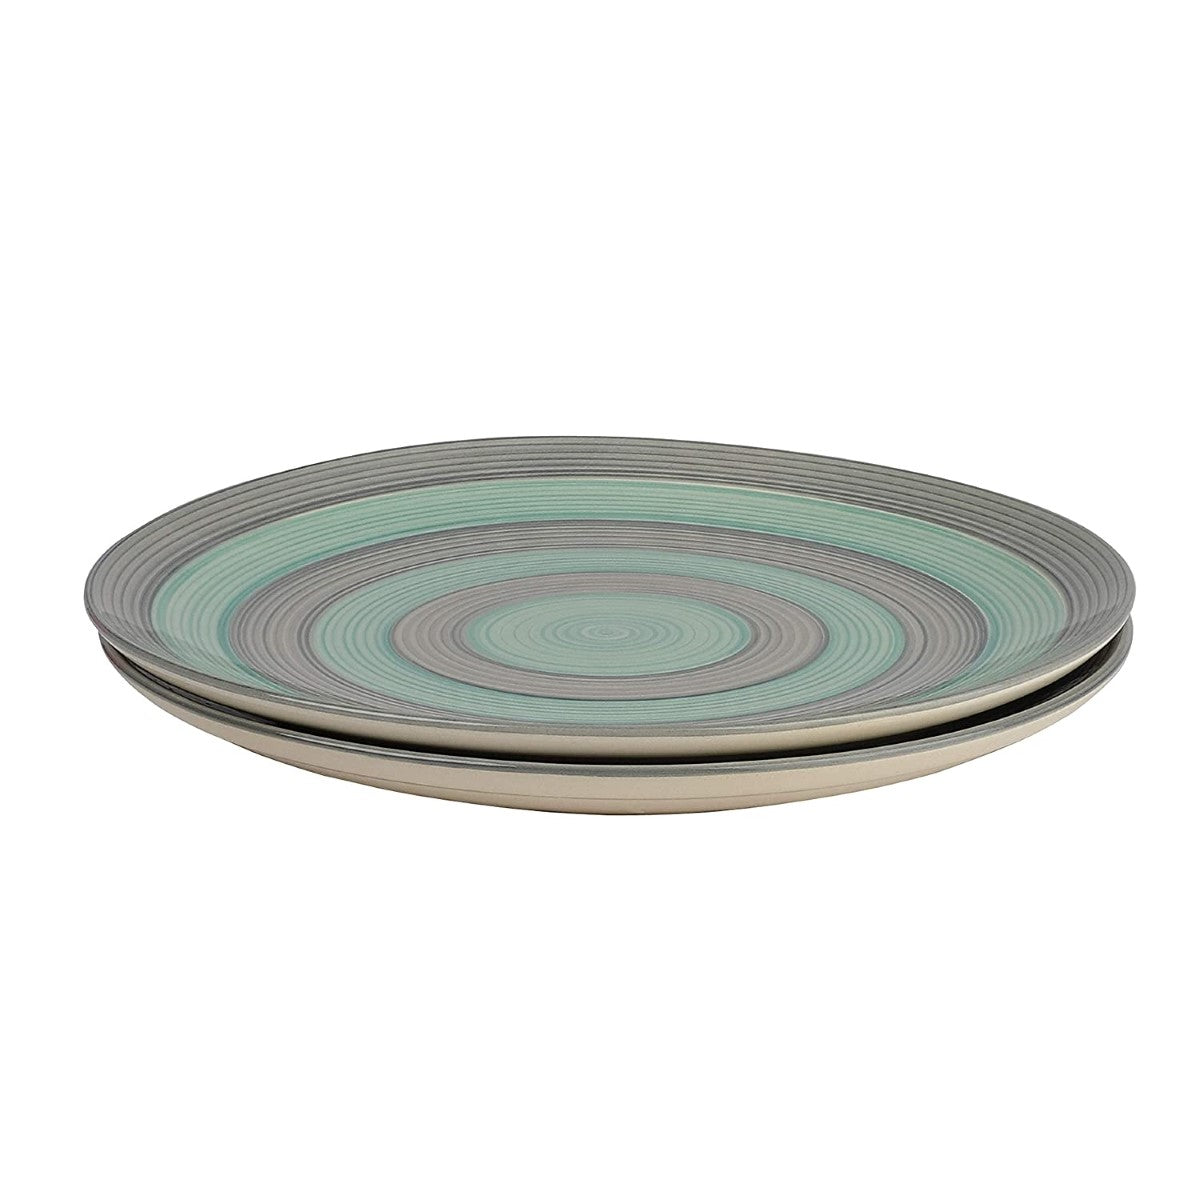 Green & Grey Handpainted Ceramic Dinner Plates (Set of 2)